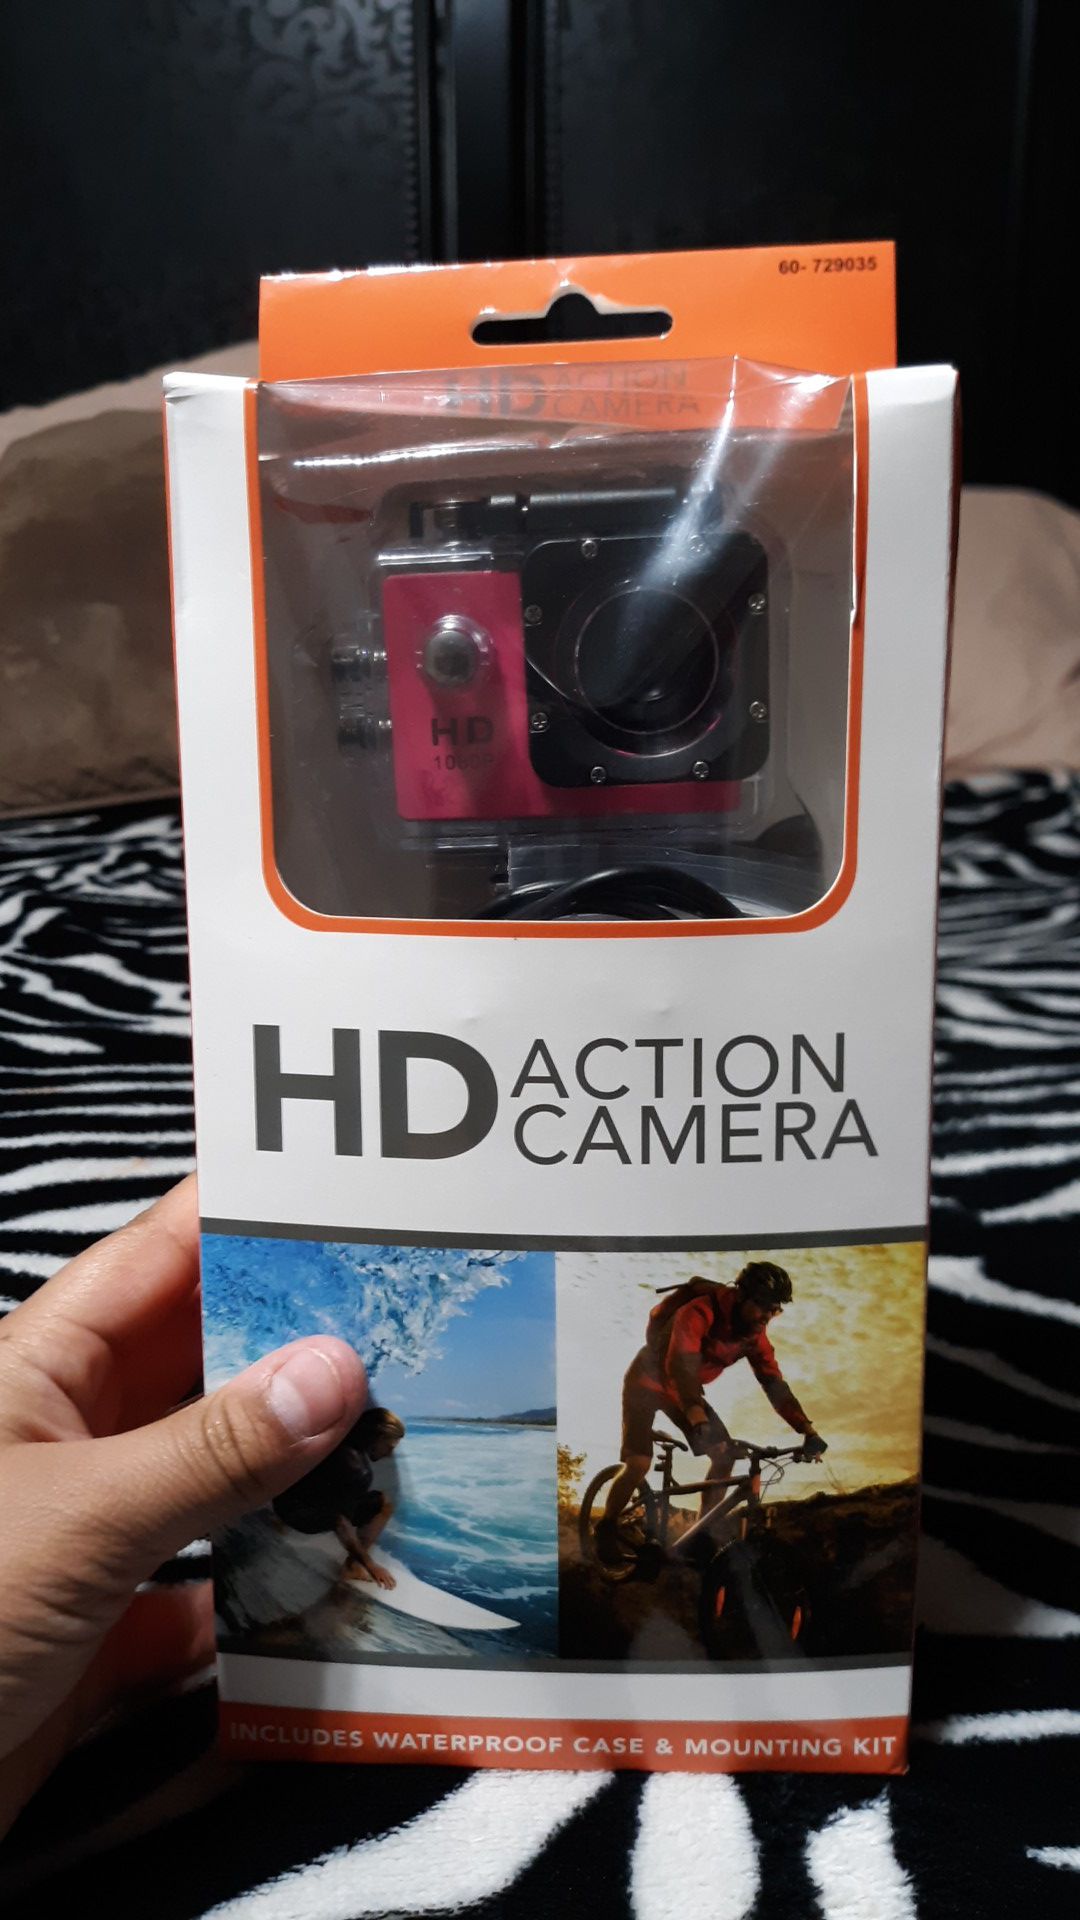 HD action camera similar to GoPro